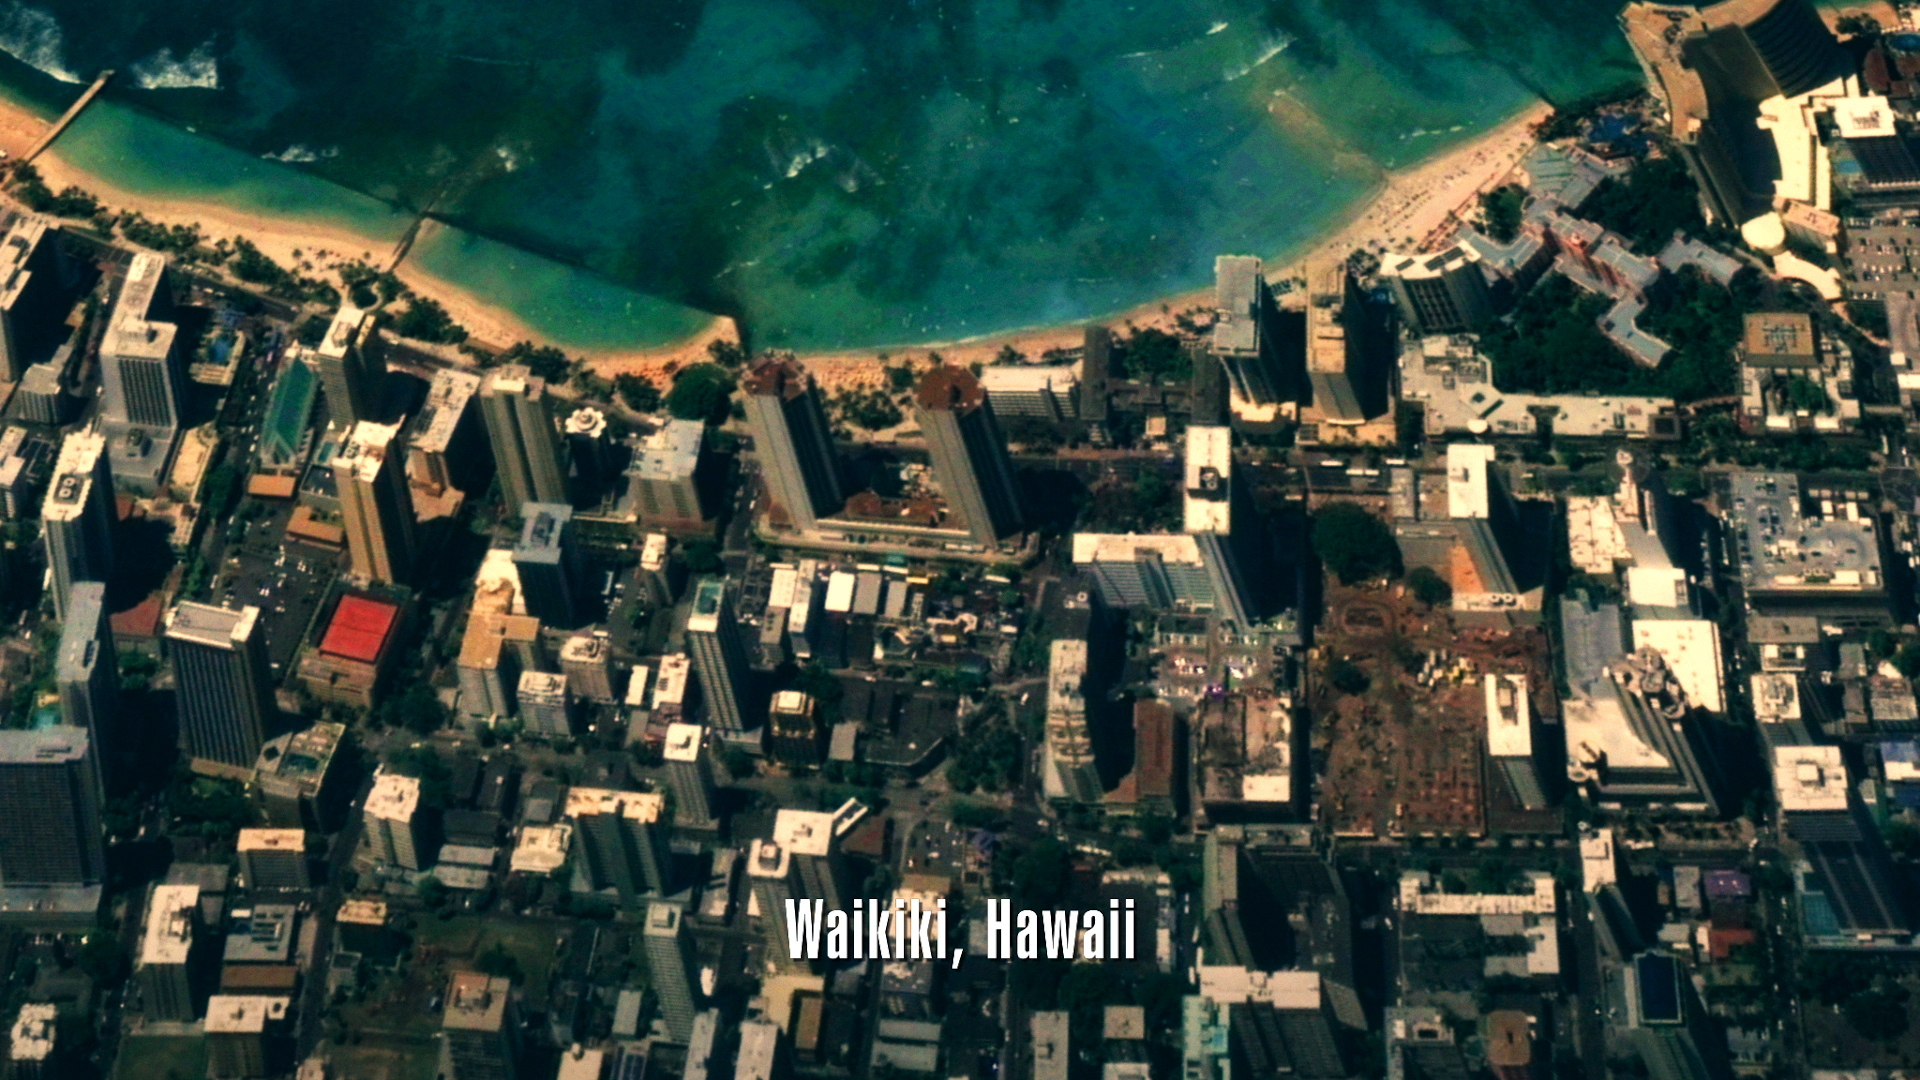 Google Earth imagery of Waikiki